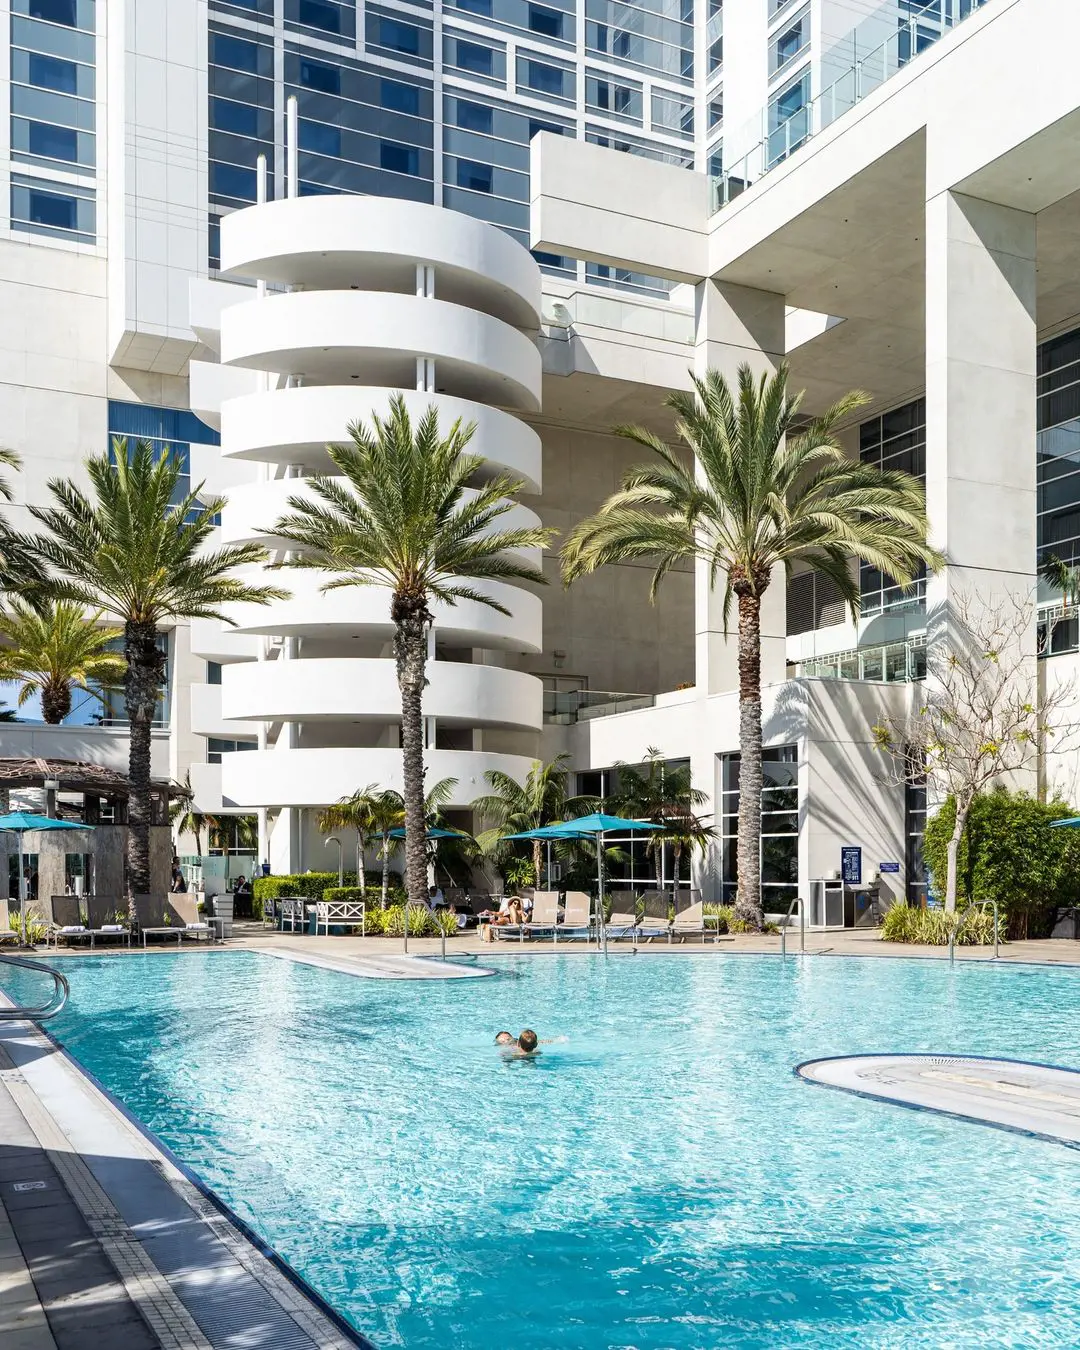 Poolside view of Hilton San Diego Bayfront.